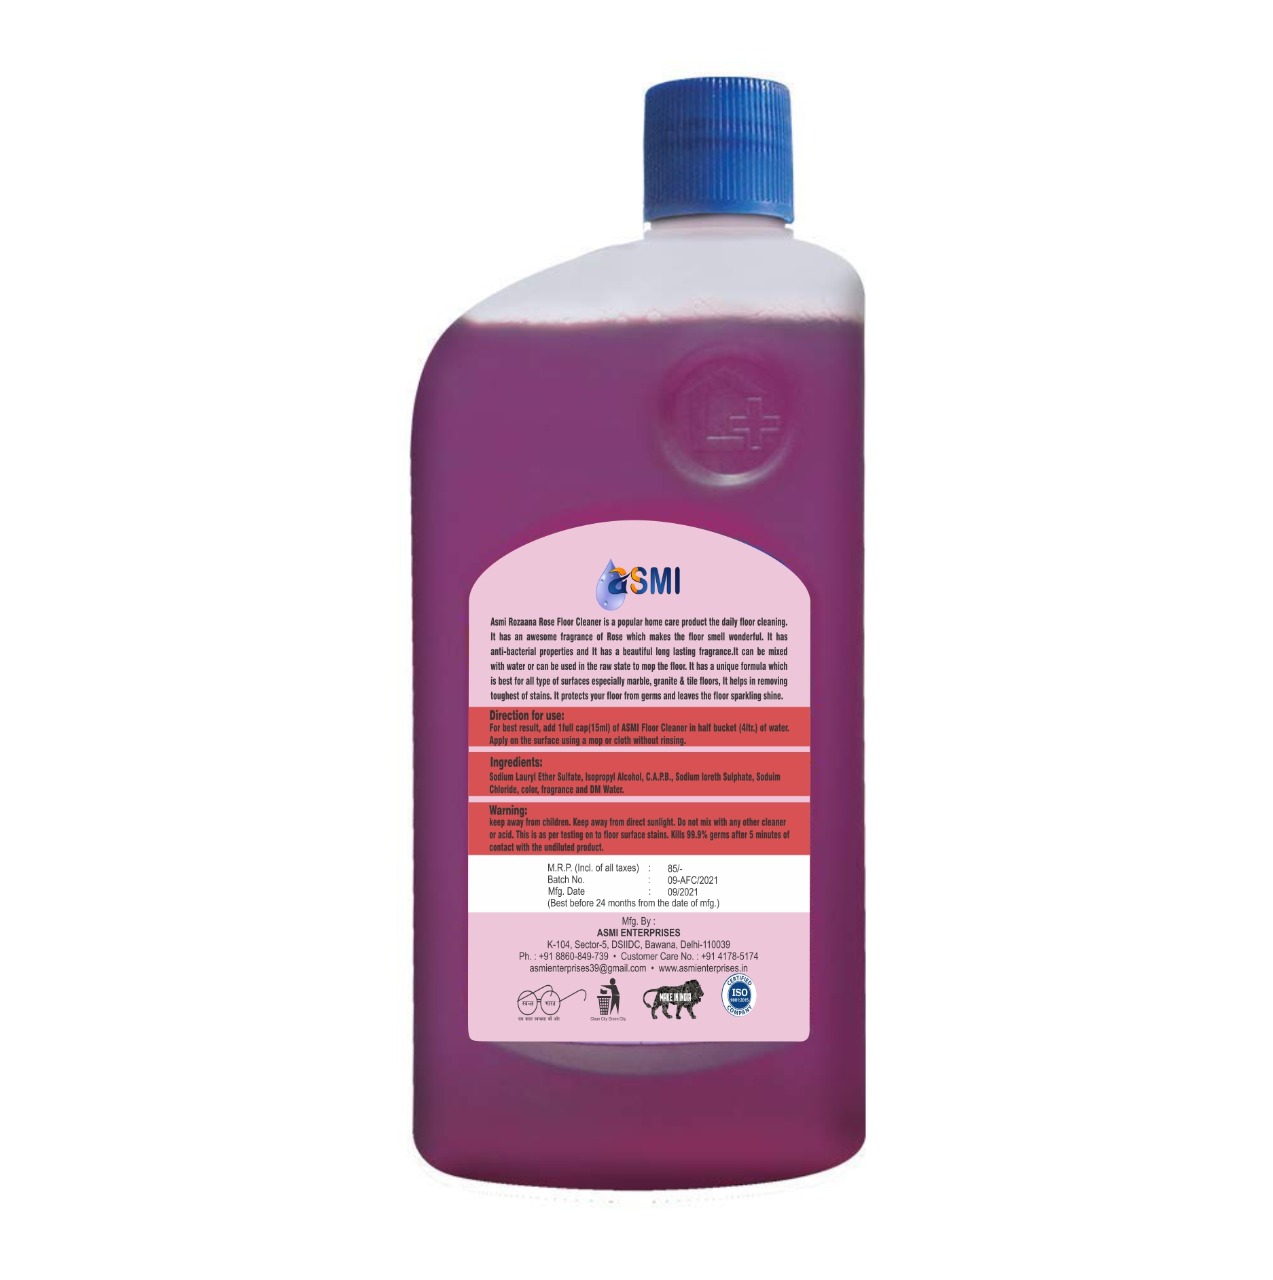 floor-cleaner-lavender-500-ml-pack-of-24-pcs-pack-of